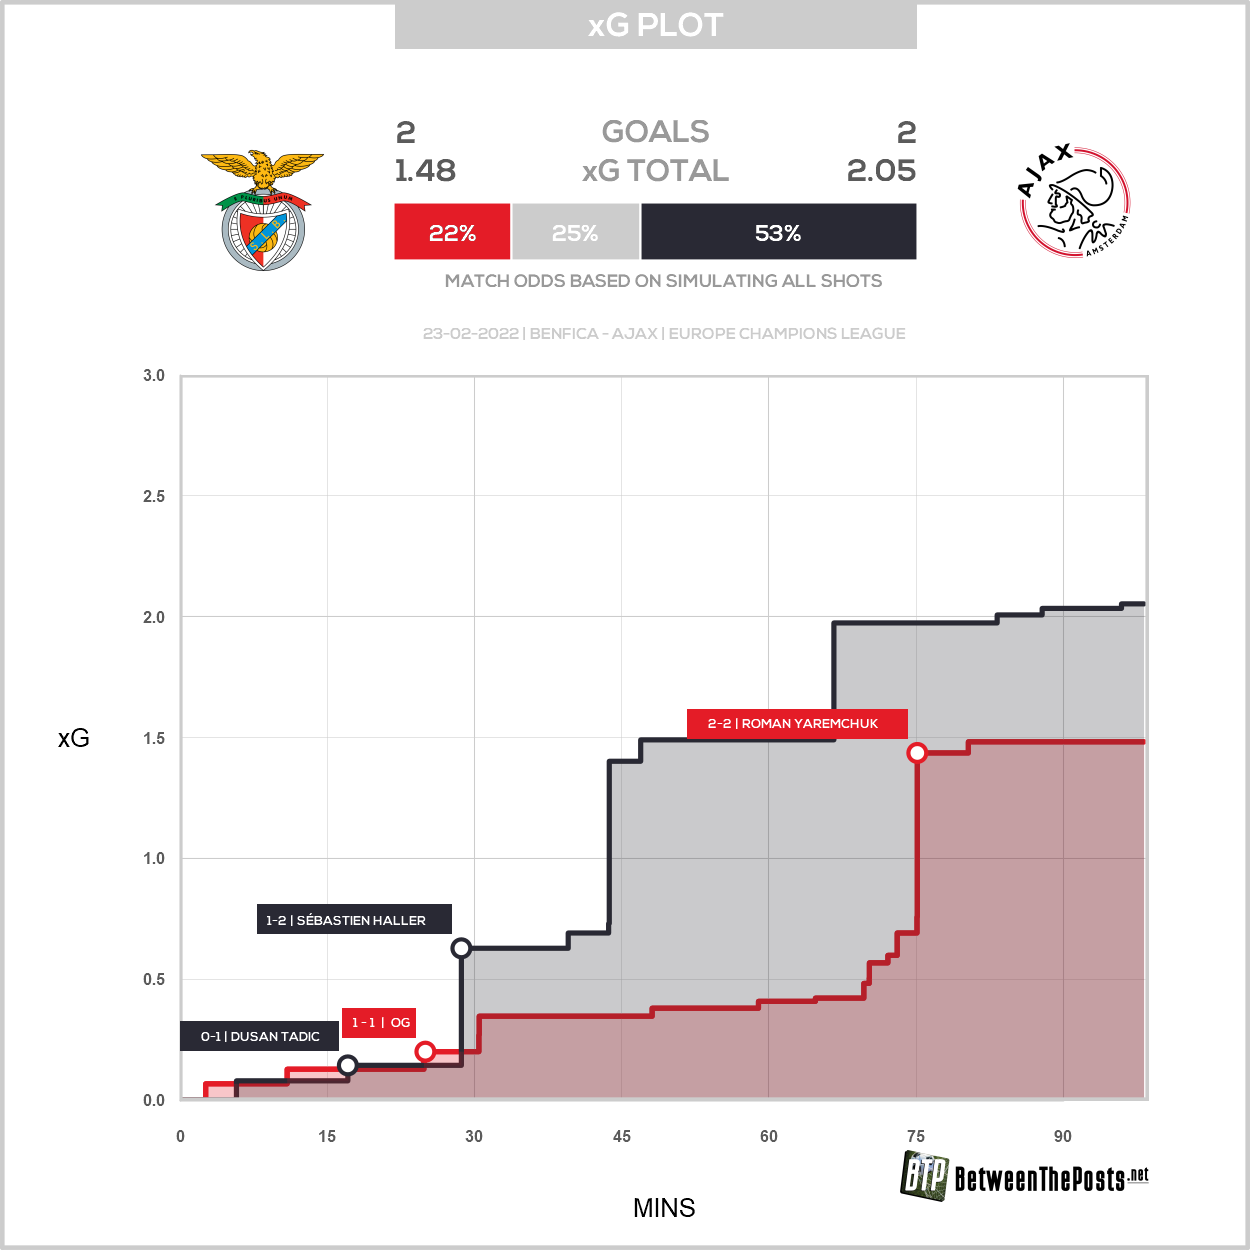 2022 02 23 Xg Plot Benfica 2 2 Ajax